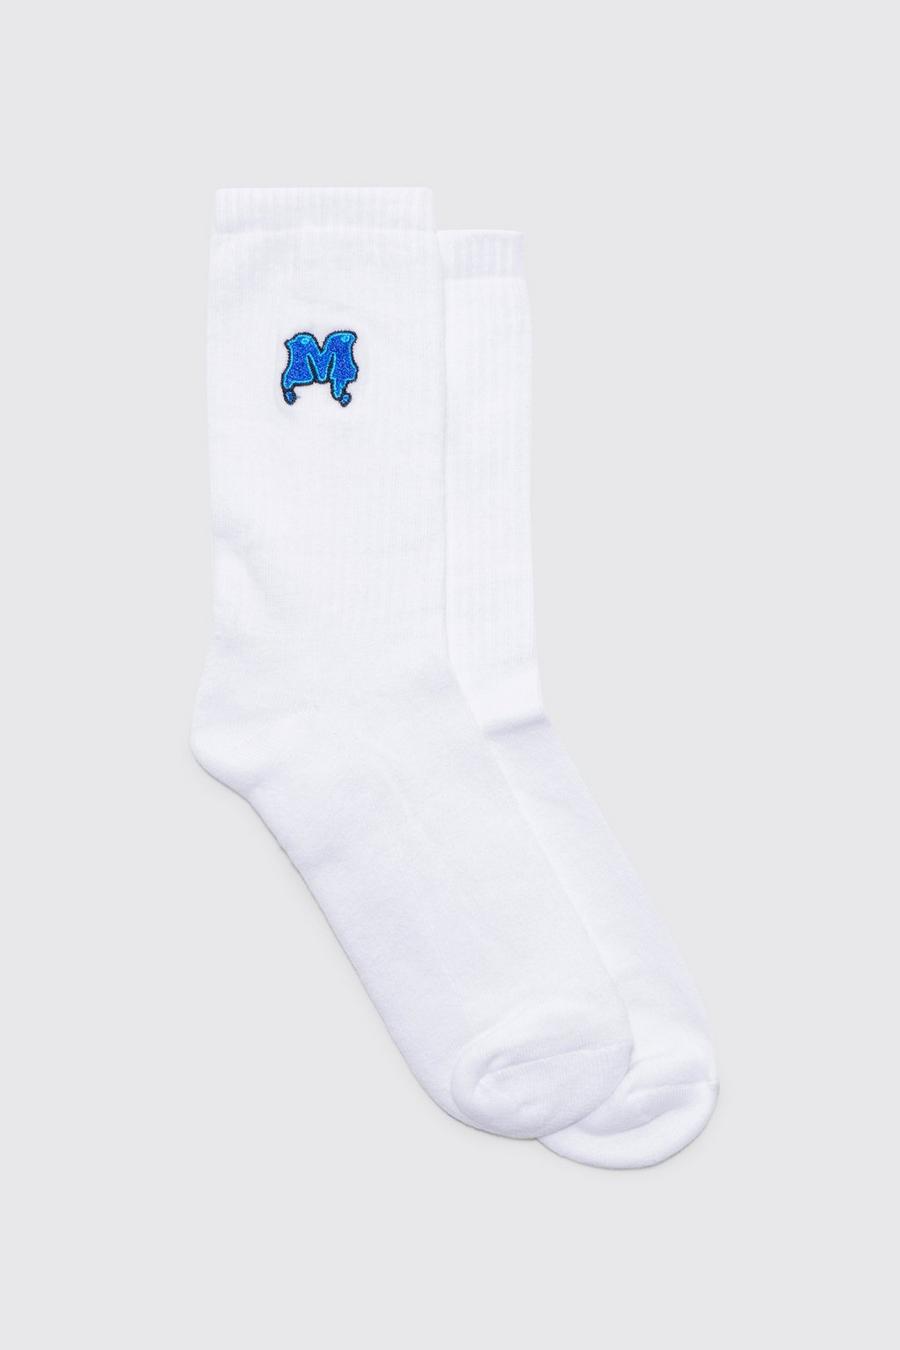 M Embroidered Sports Socks, White